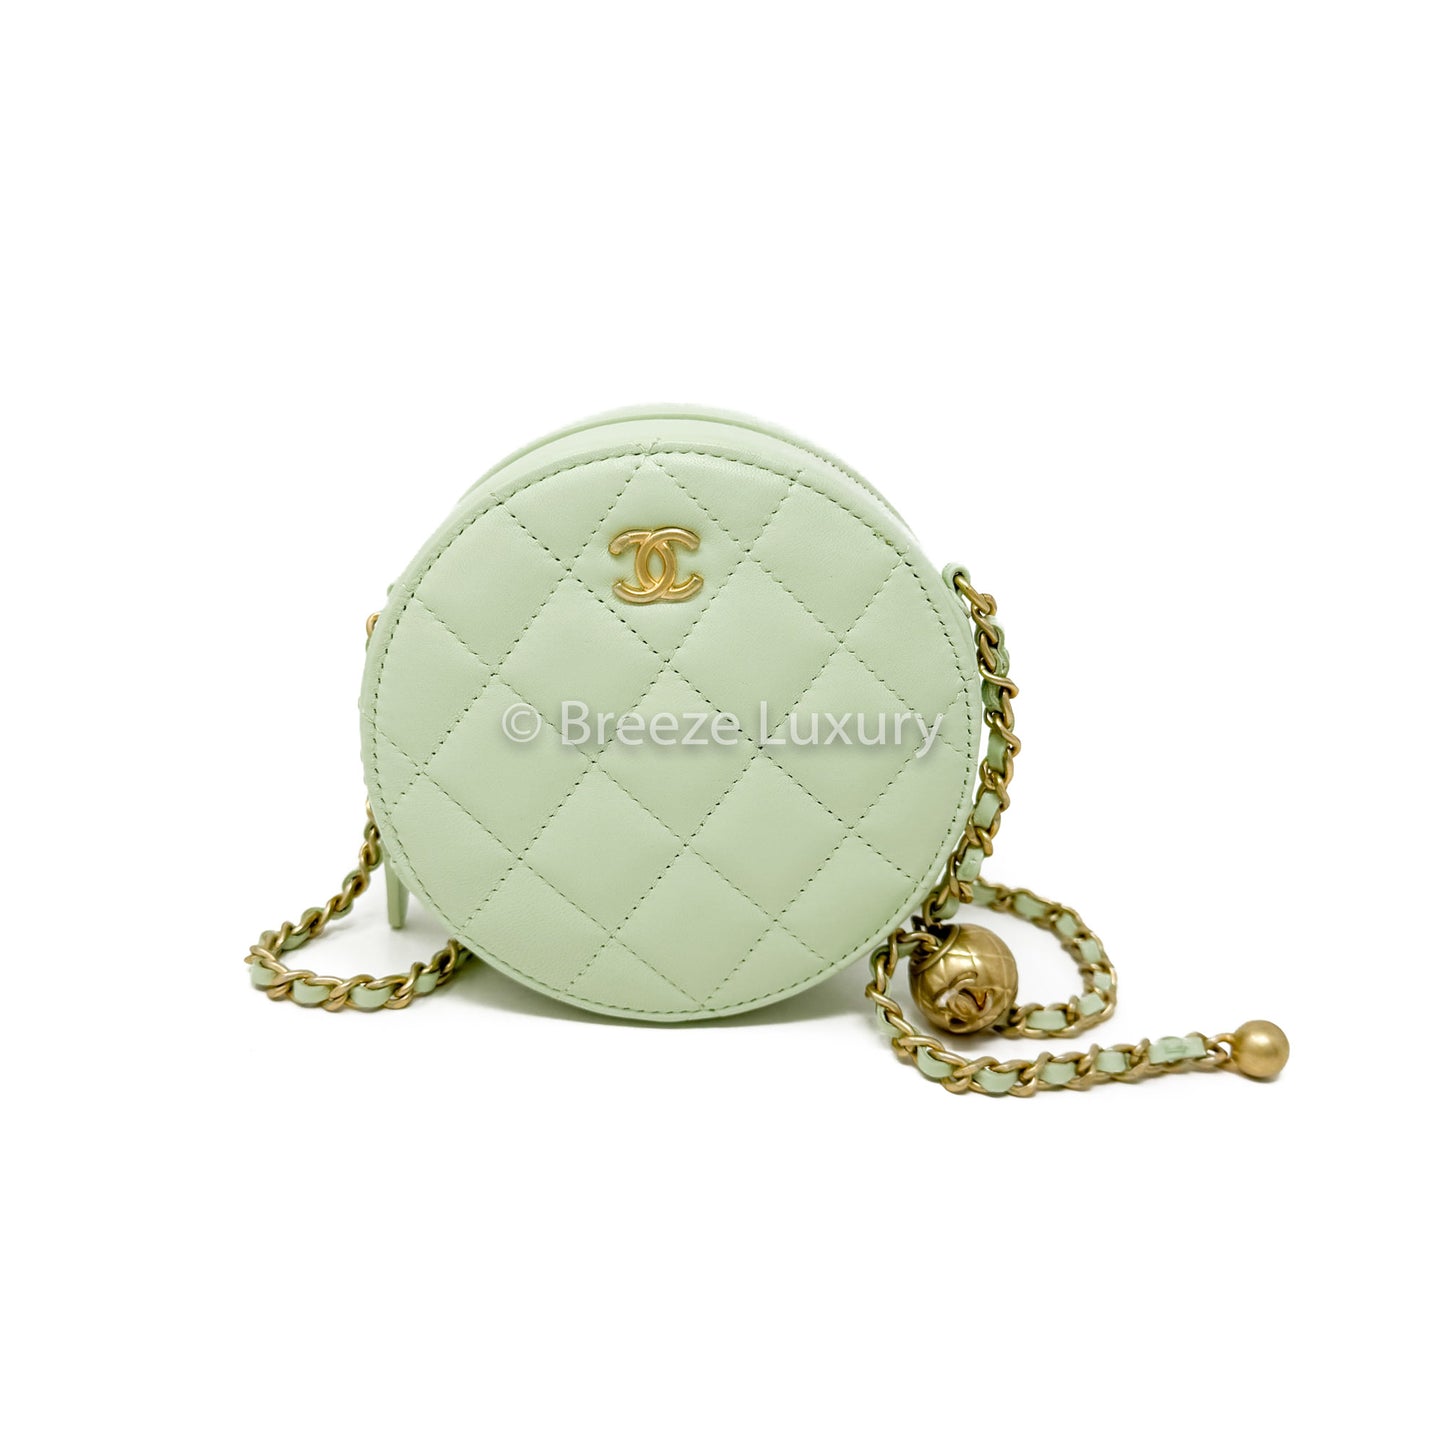 Chanel Round Pearl Crush bag